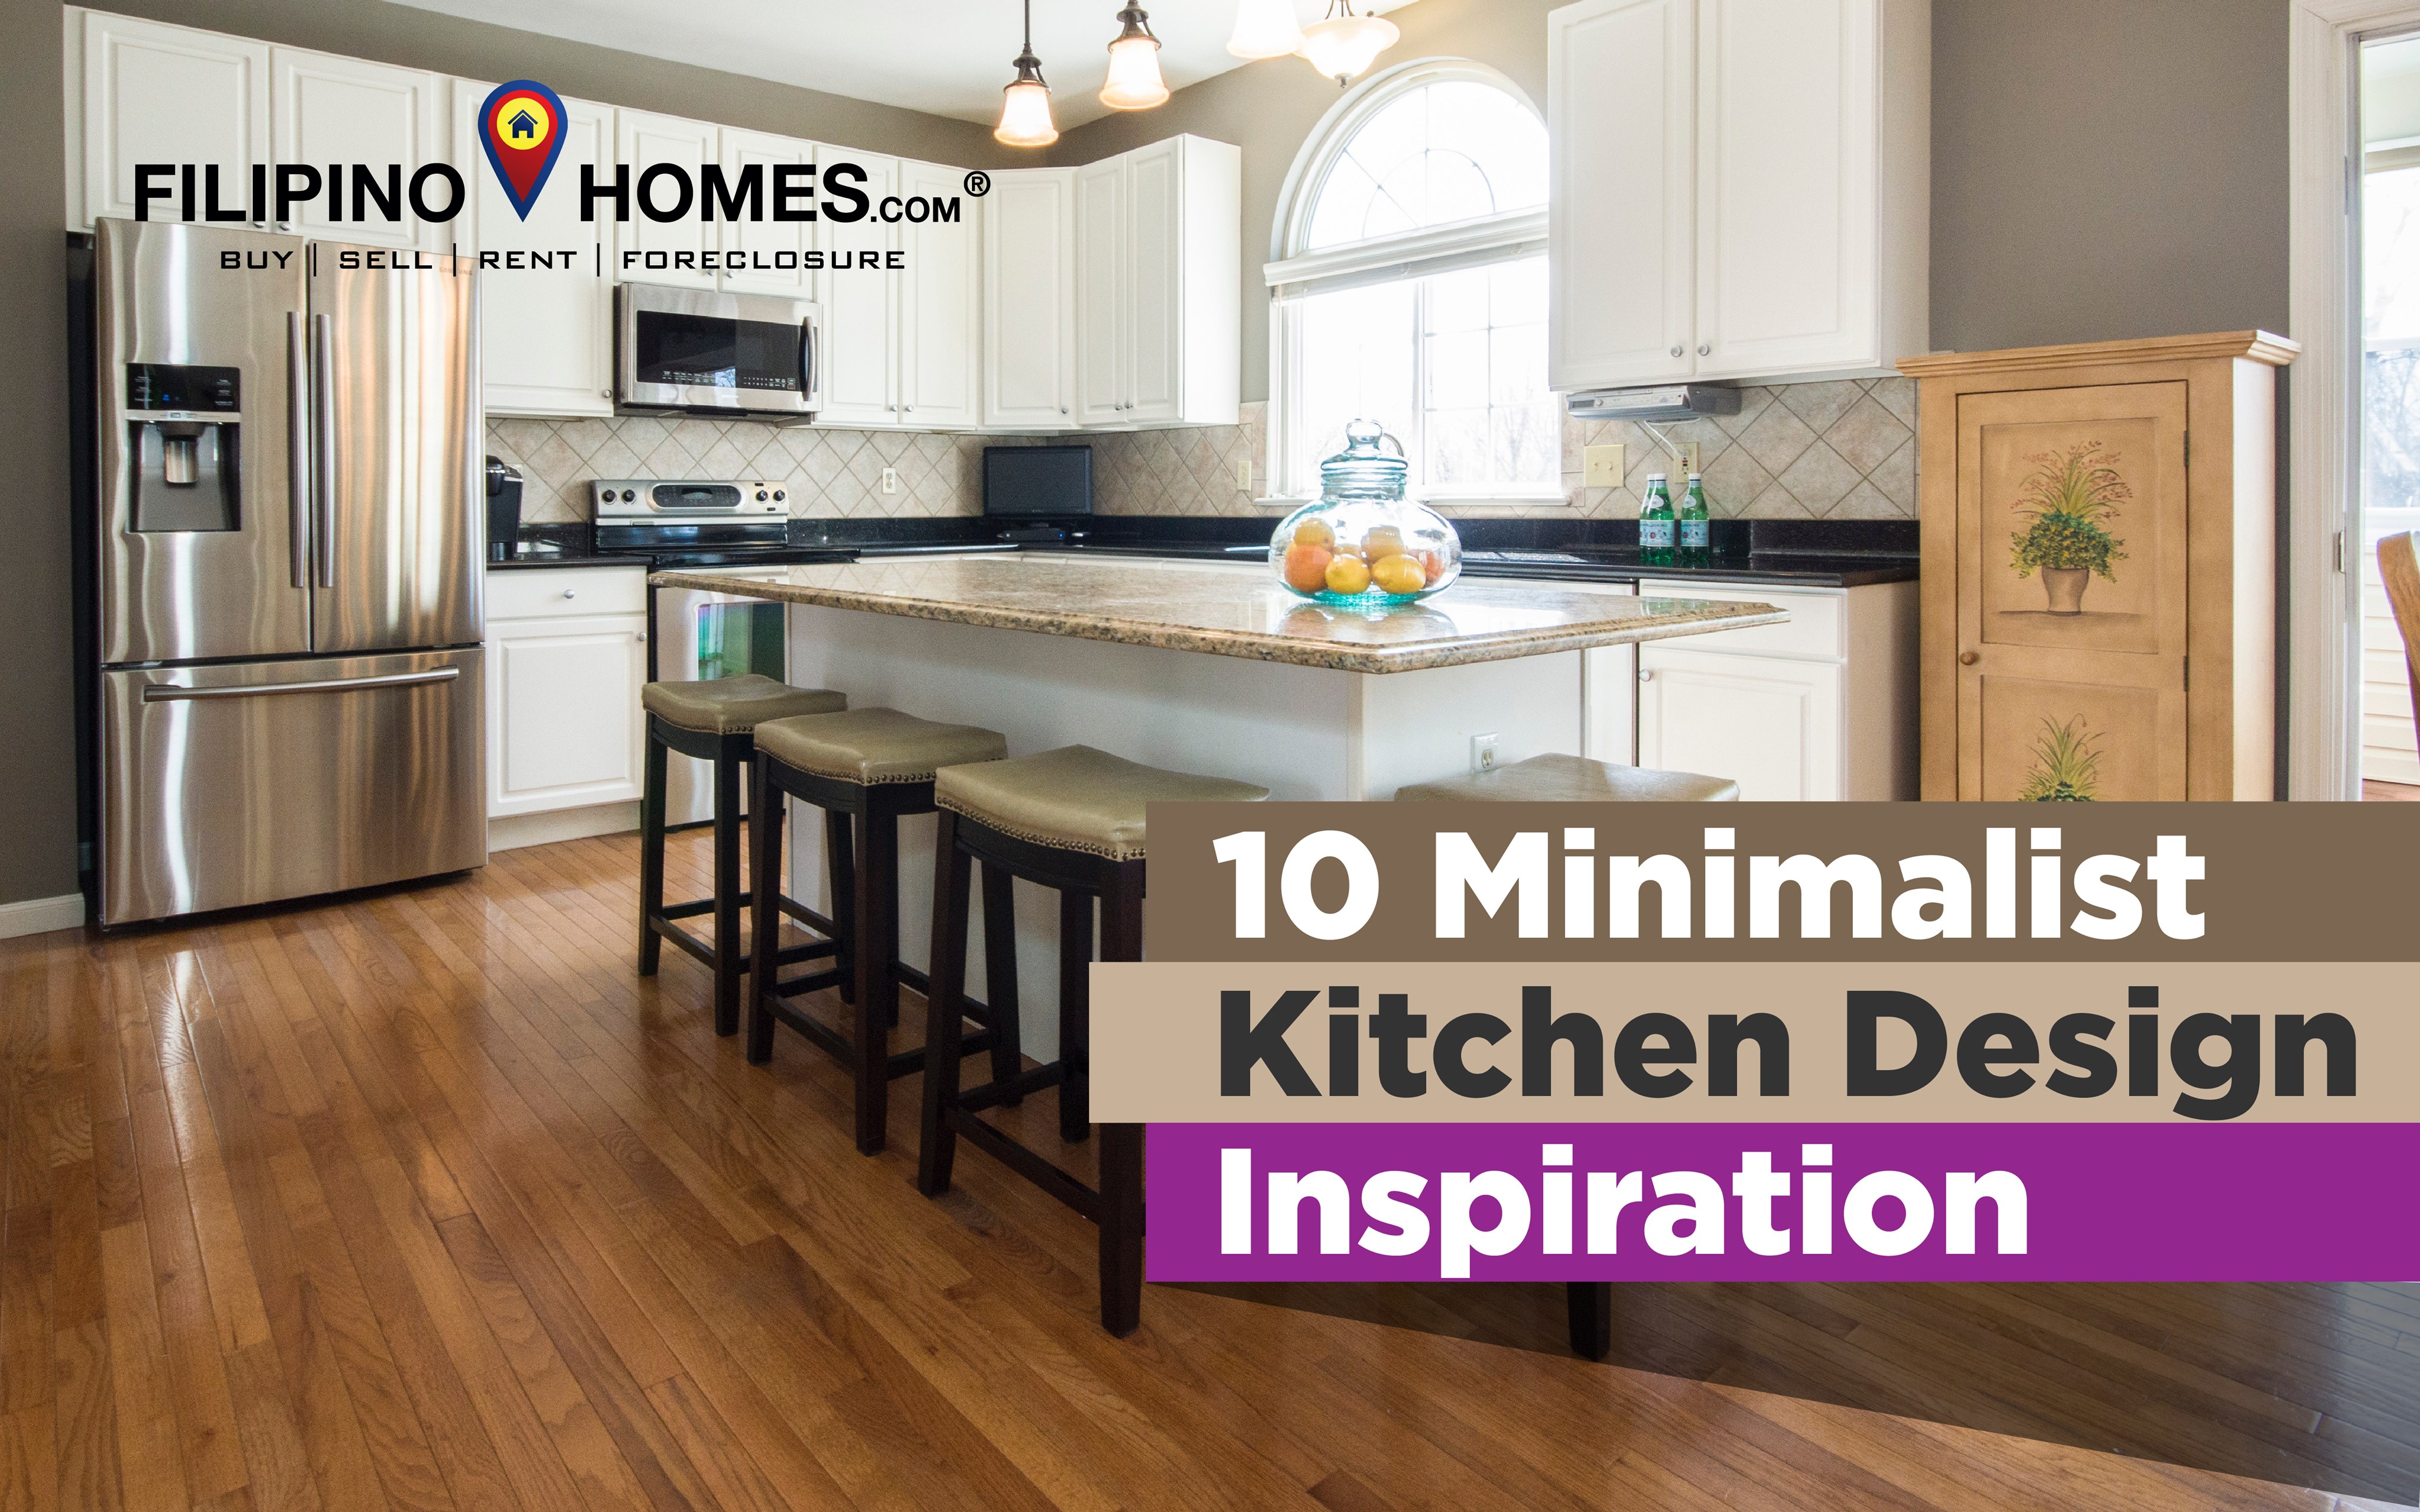 10 Minimalist Kitchen Design Inspiration | Filipino Homes Official Blog